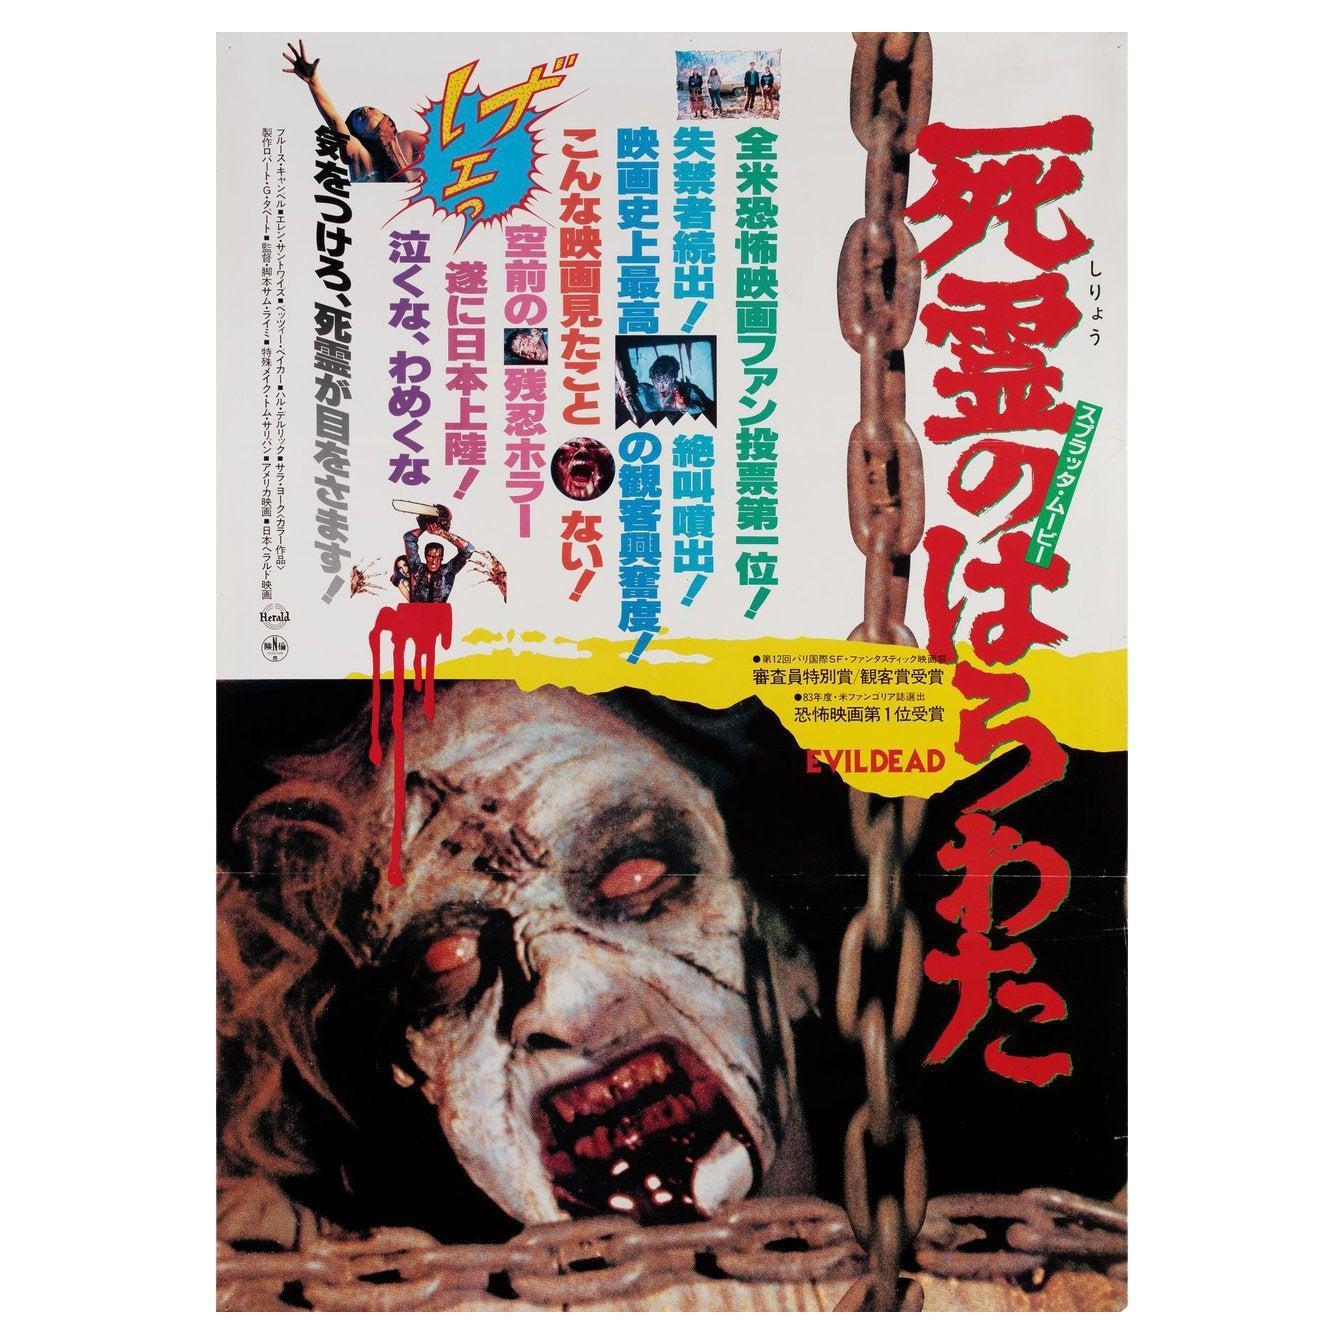 The Evil Dead 1984 Japanese B2 Film Poster For Sale